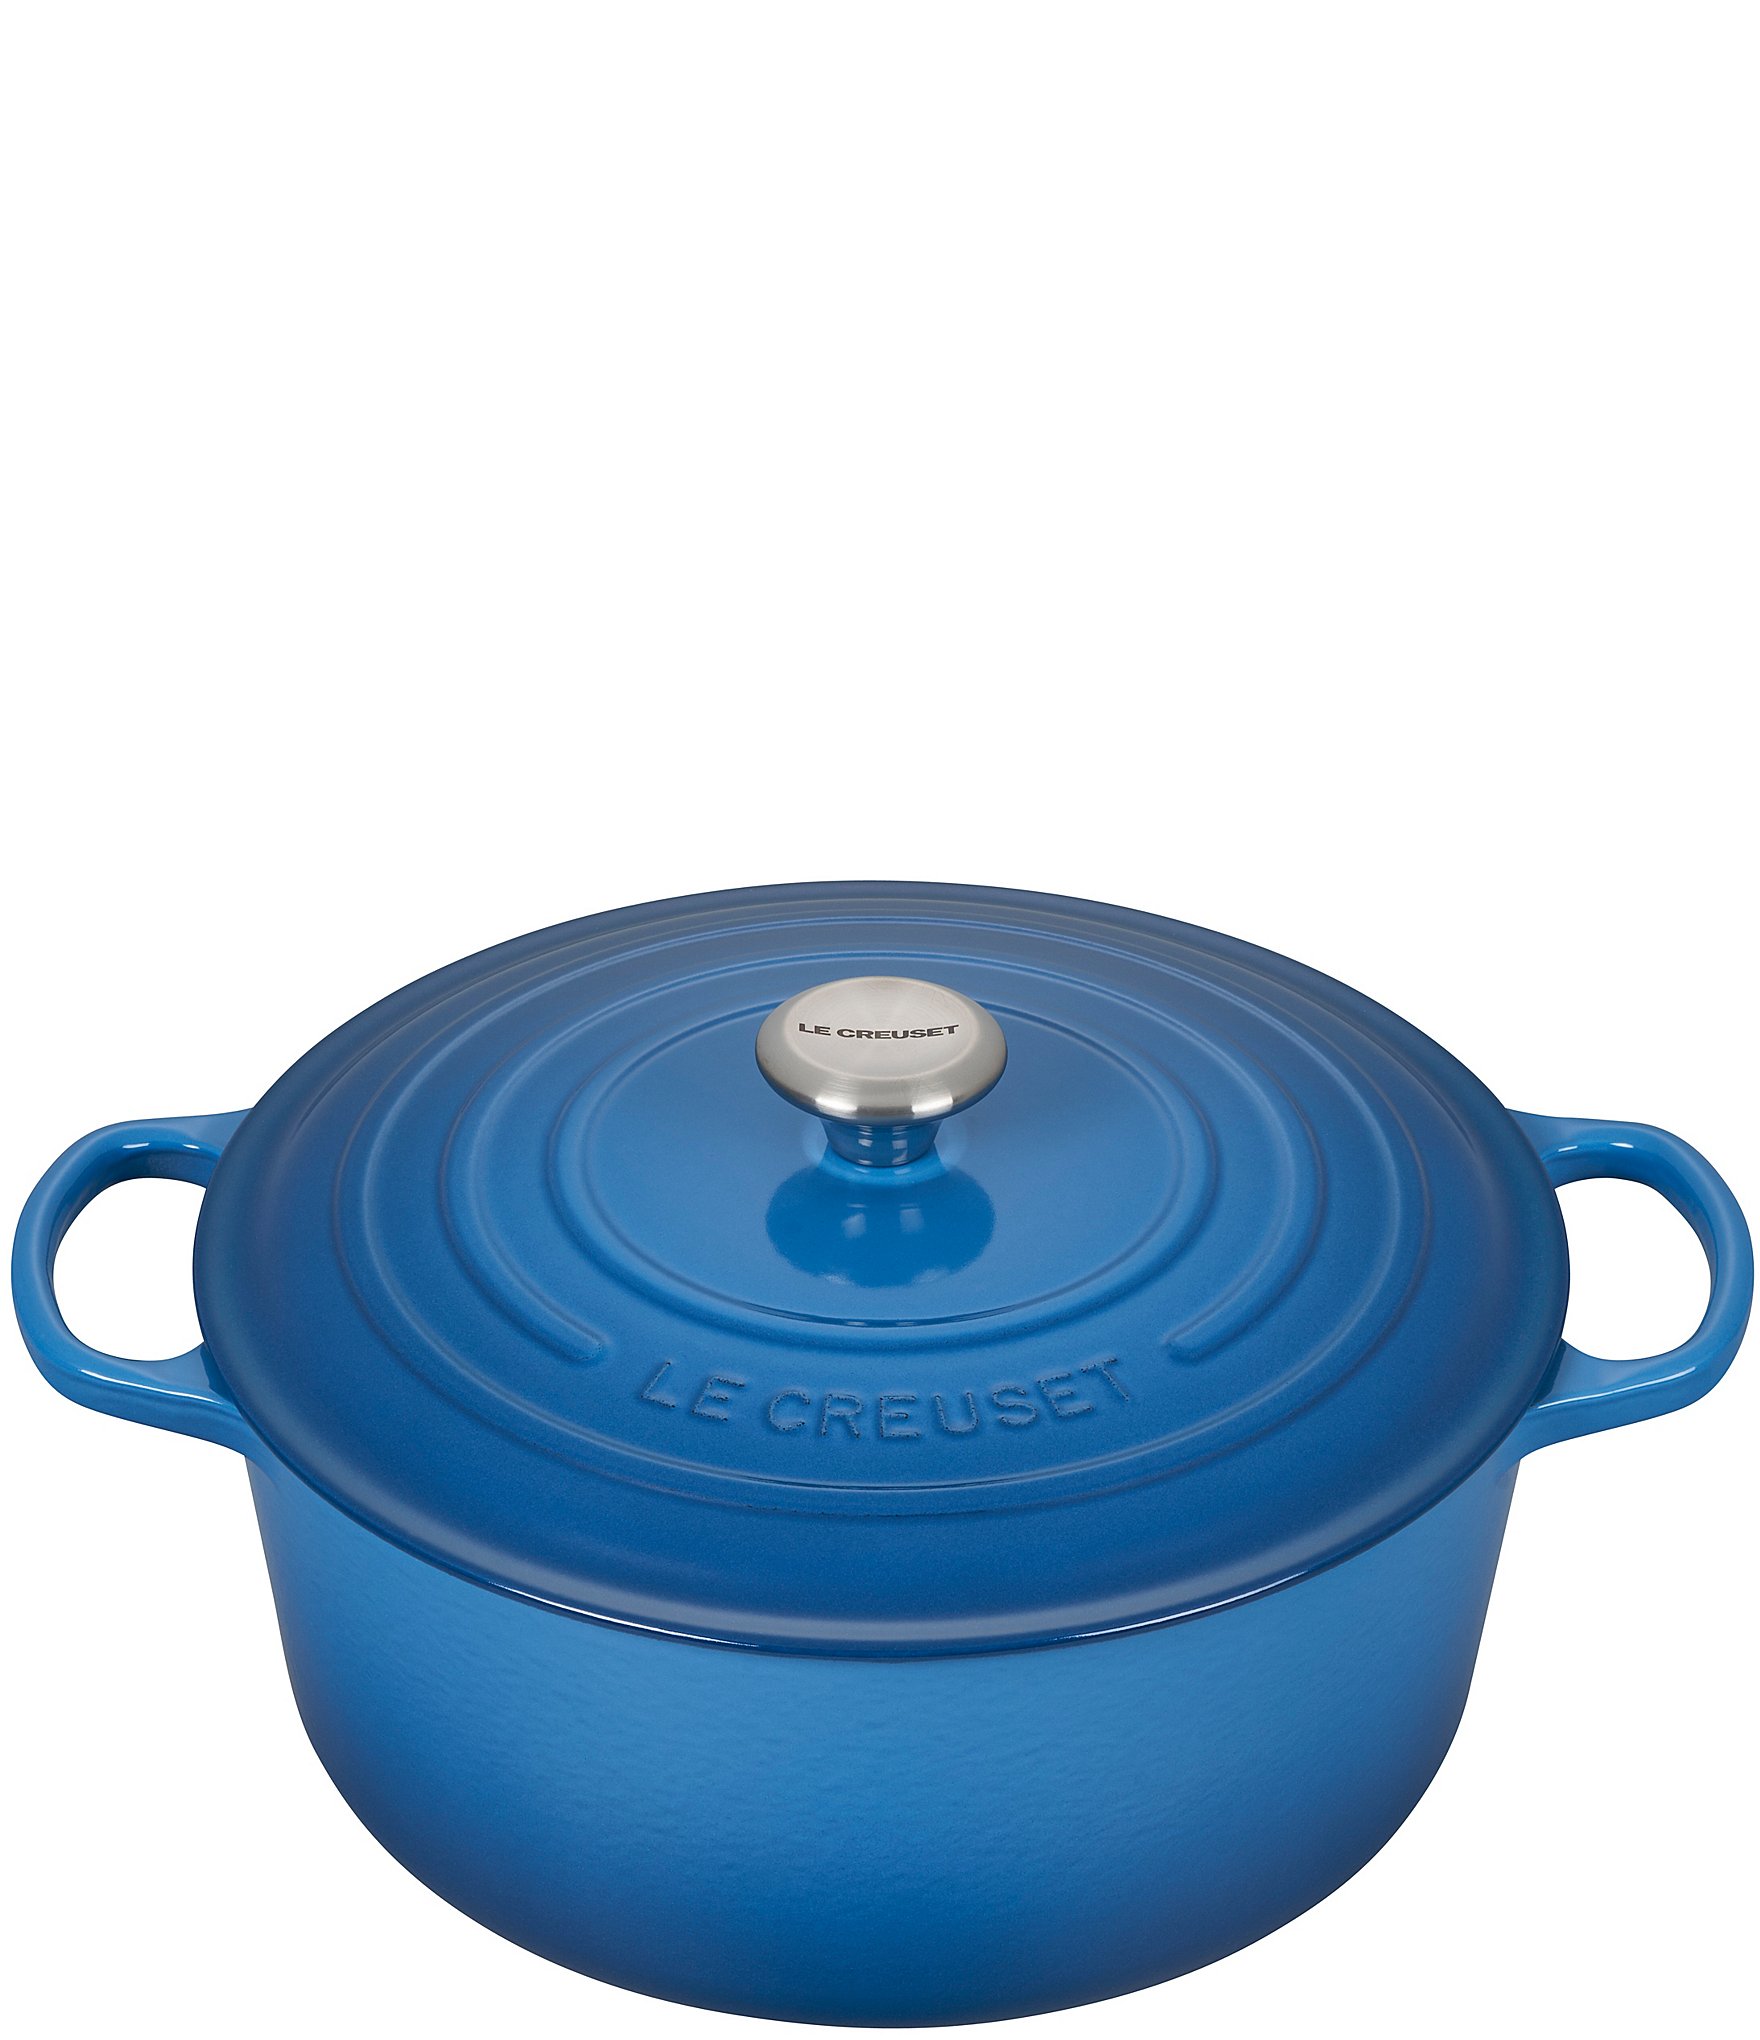 Le Creuset Traditional Oval Dutch Oven 8QT - COASTAL BLUE – LittleLuxeOfLife